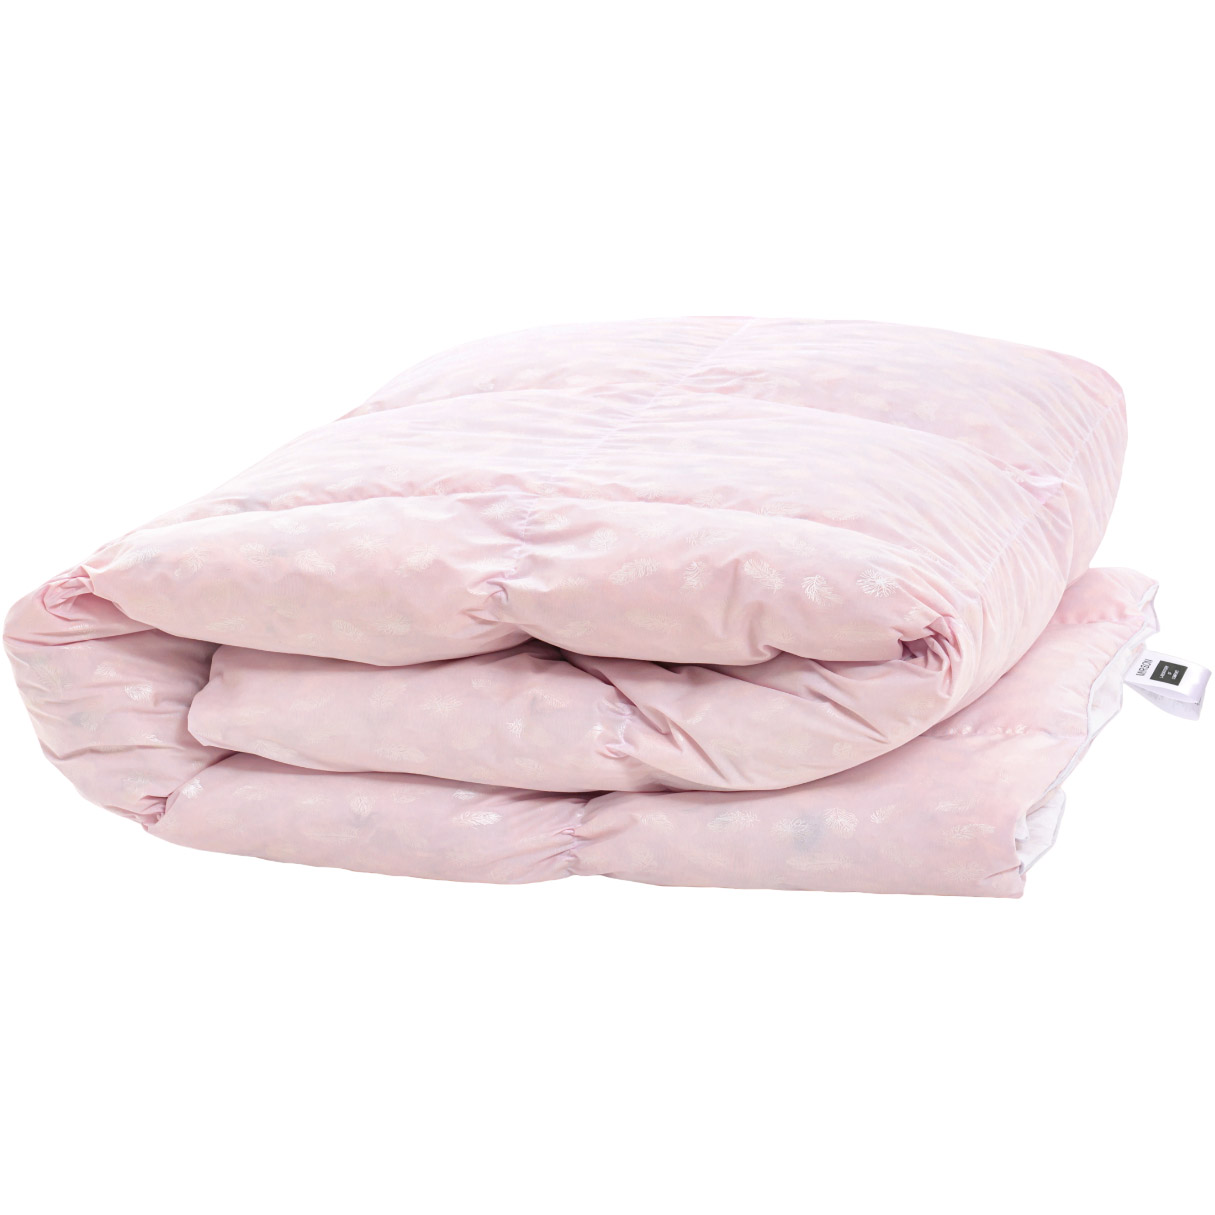 Одеяло пуховое MirSon Karmen №1859 Bio-Pink, 70% пух, 110x140 см, розовое (2200003013979) - фото 1